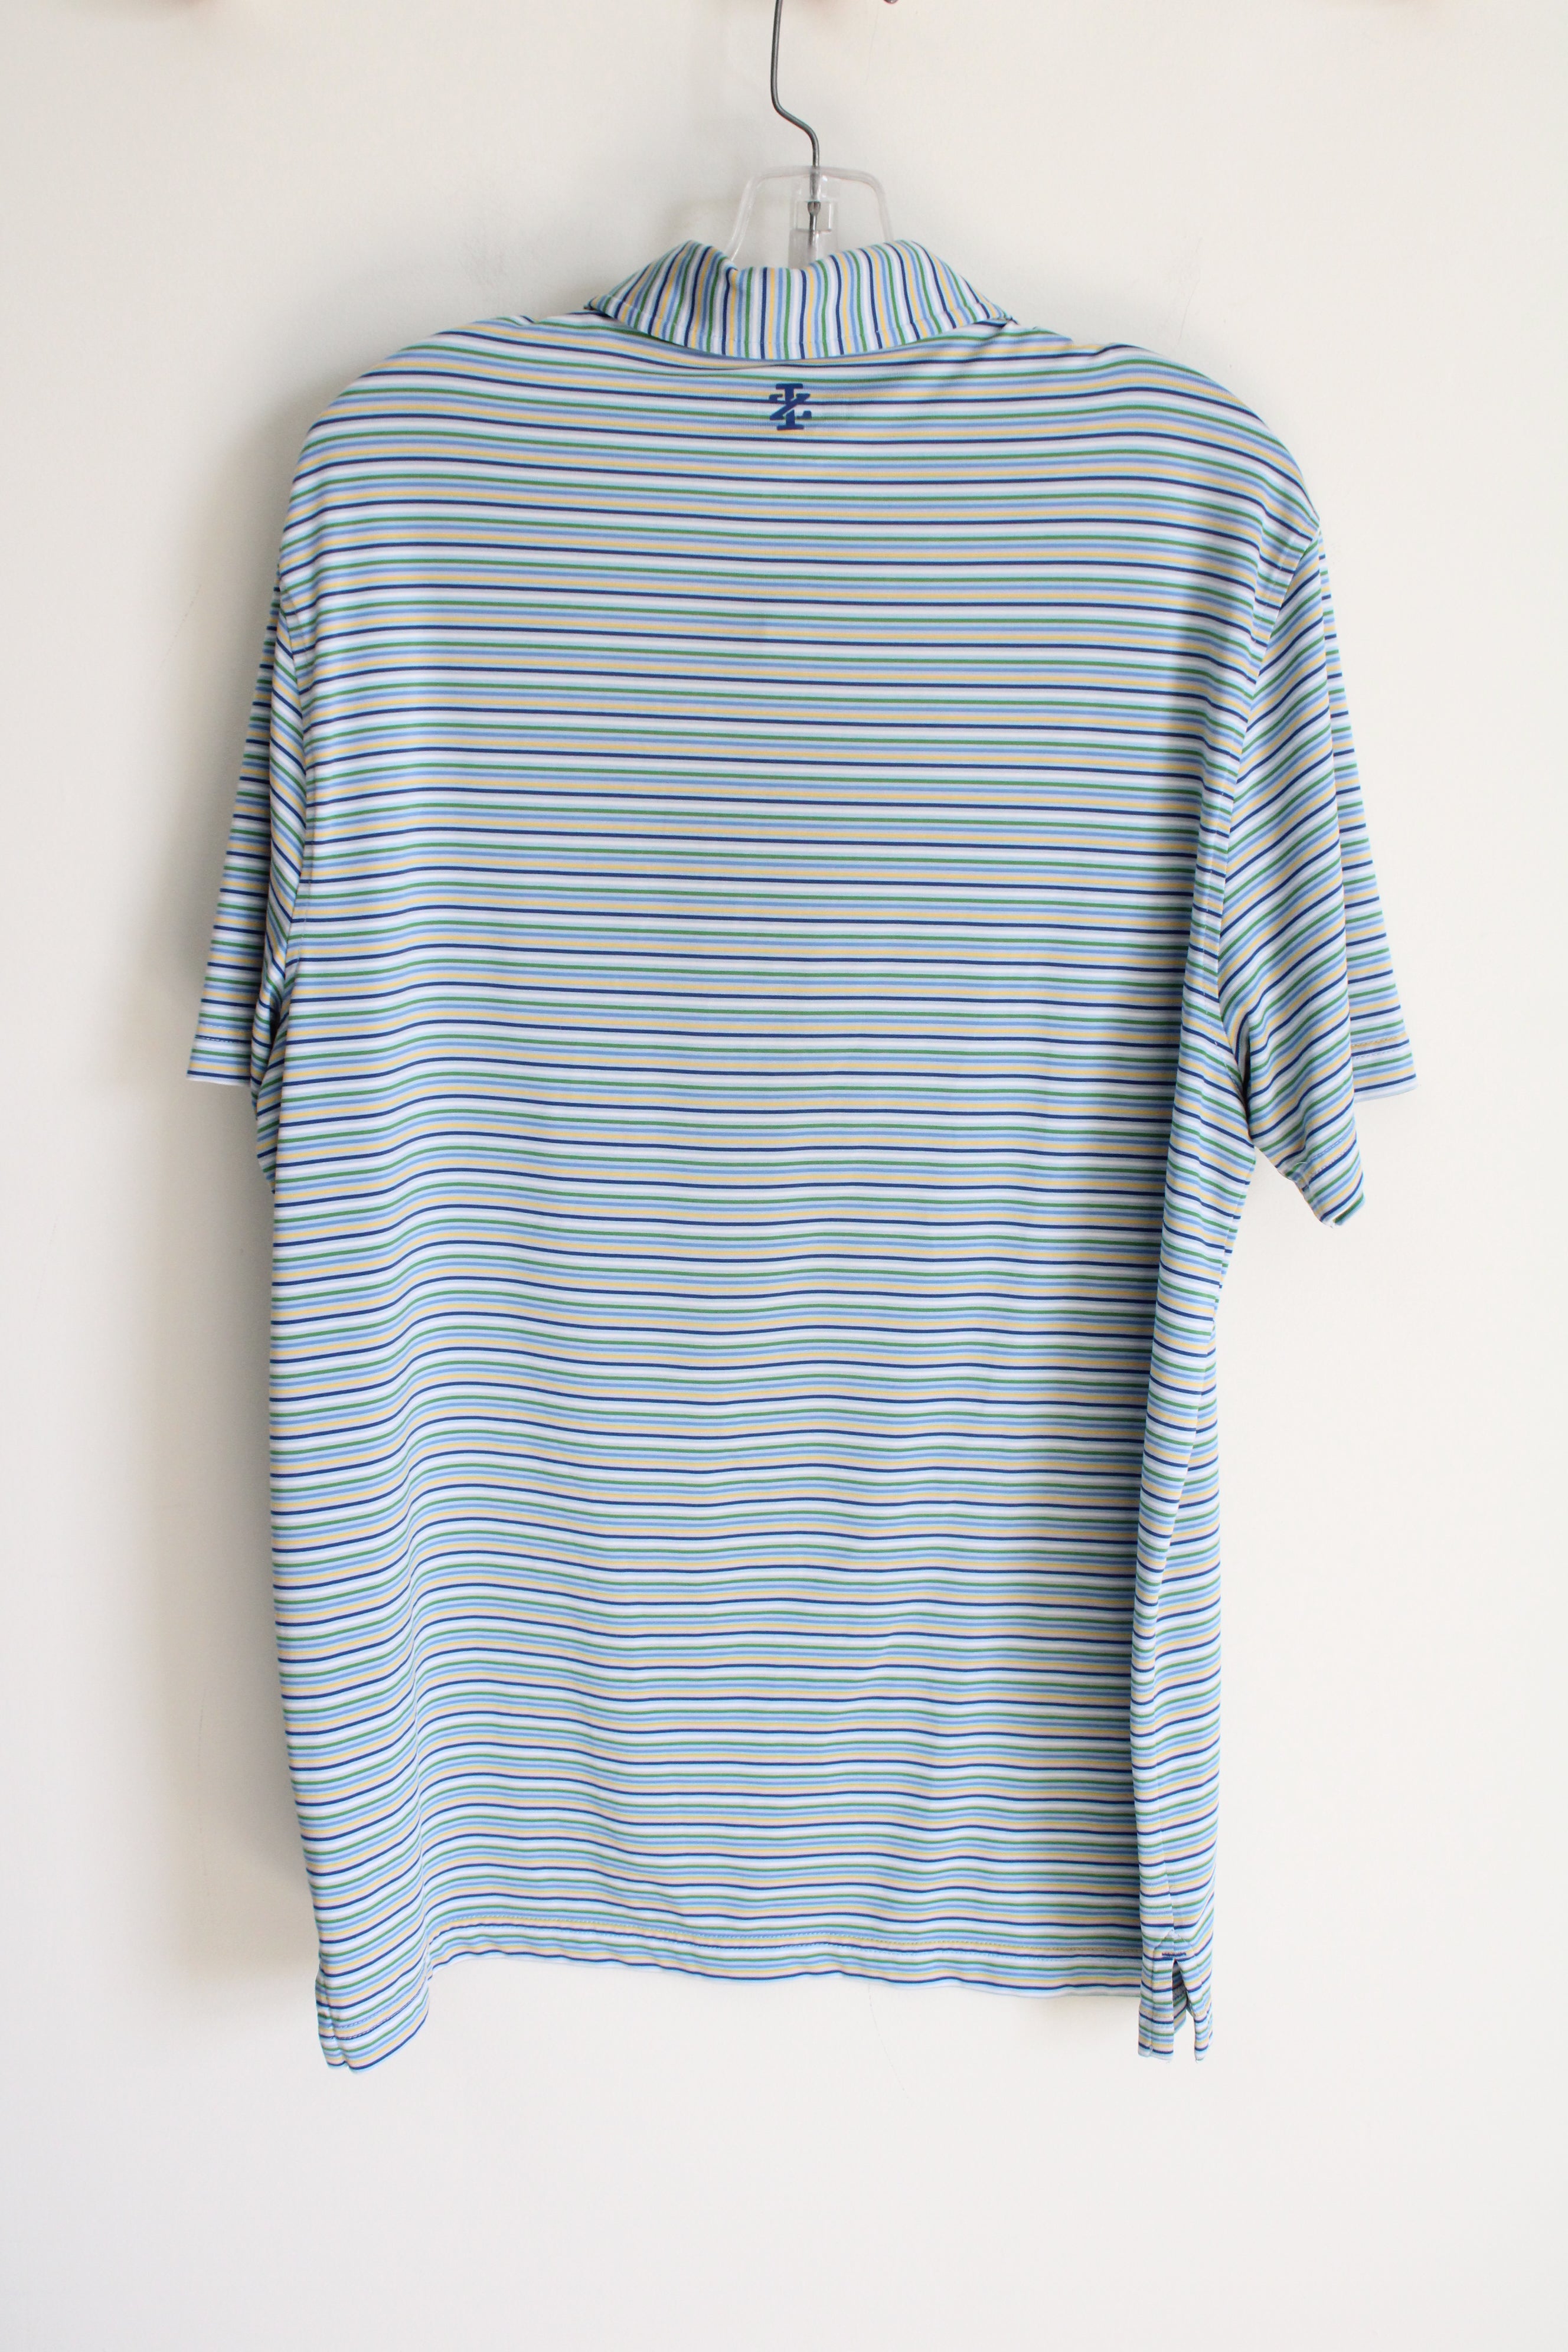 Izod Golf Stretch Blue Green Striped Polo Shirt | M